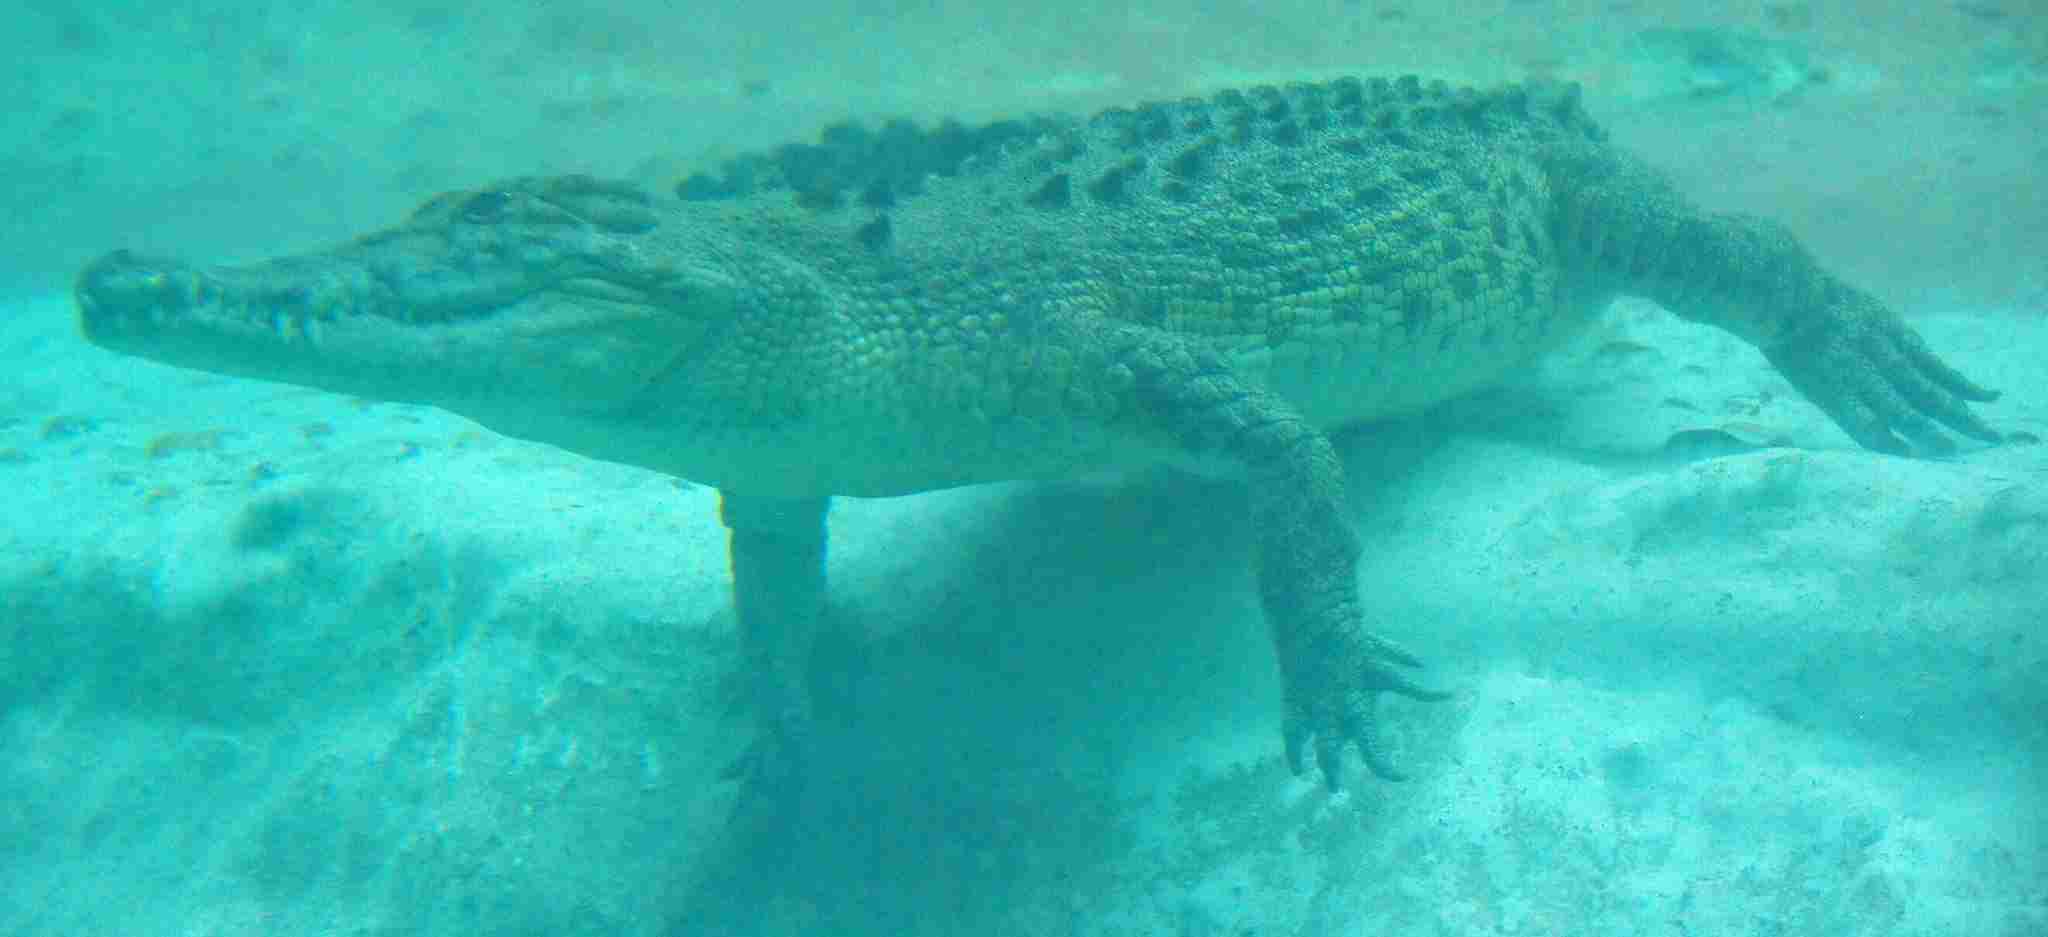 Alligator Vs Saltwater Crocodile